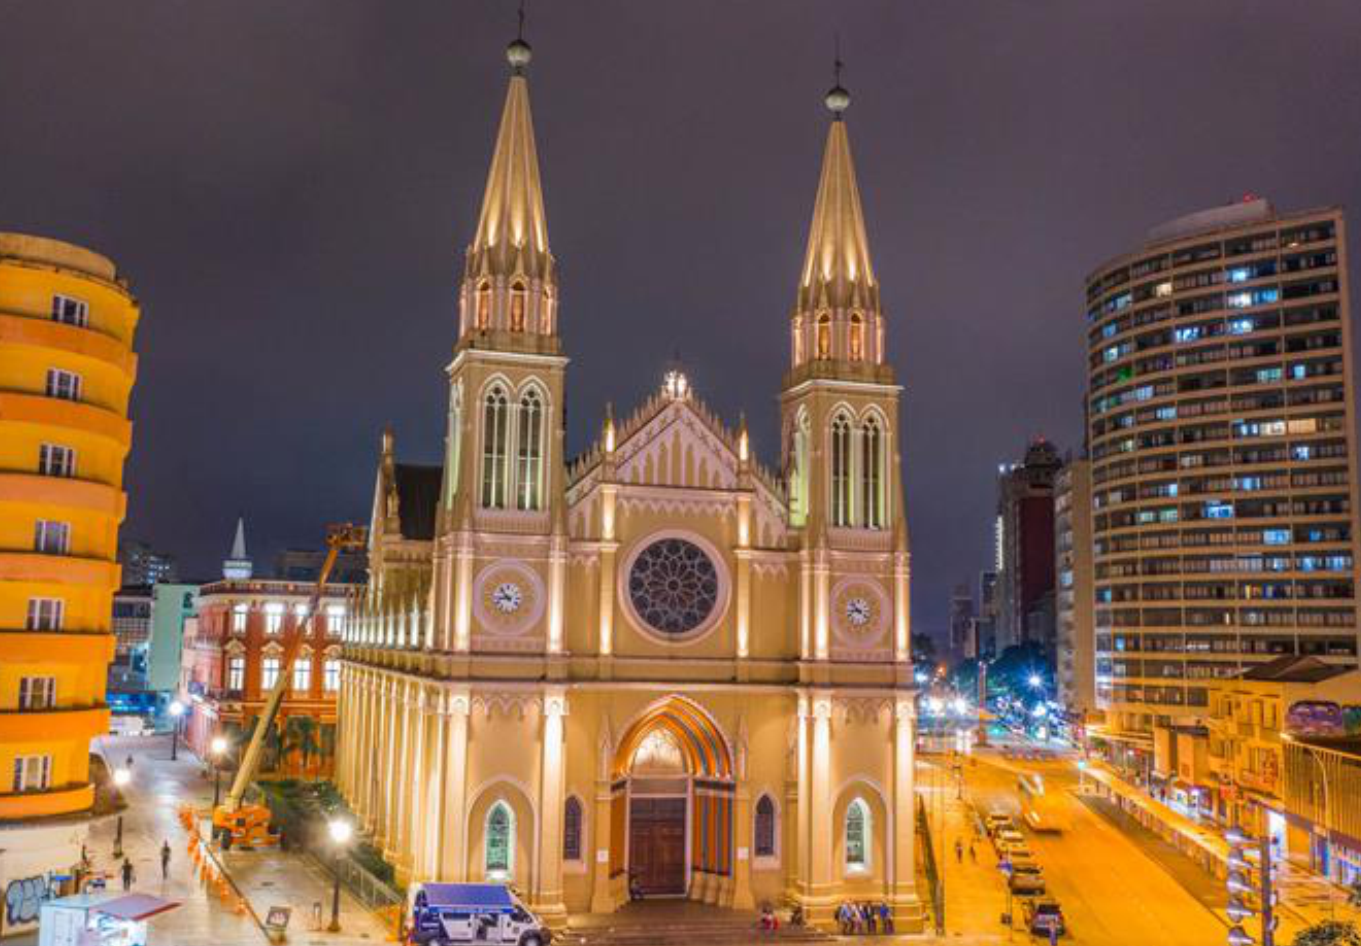 Arquidiocese de Curitiba